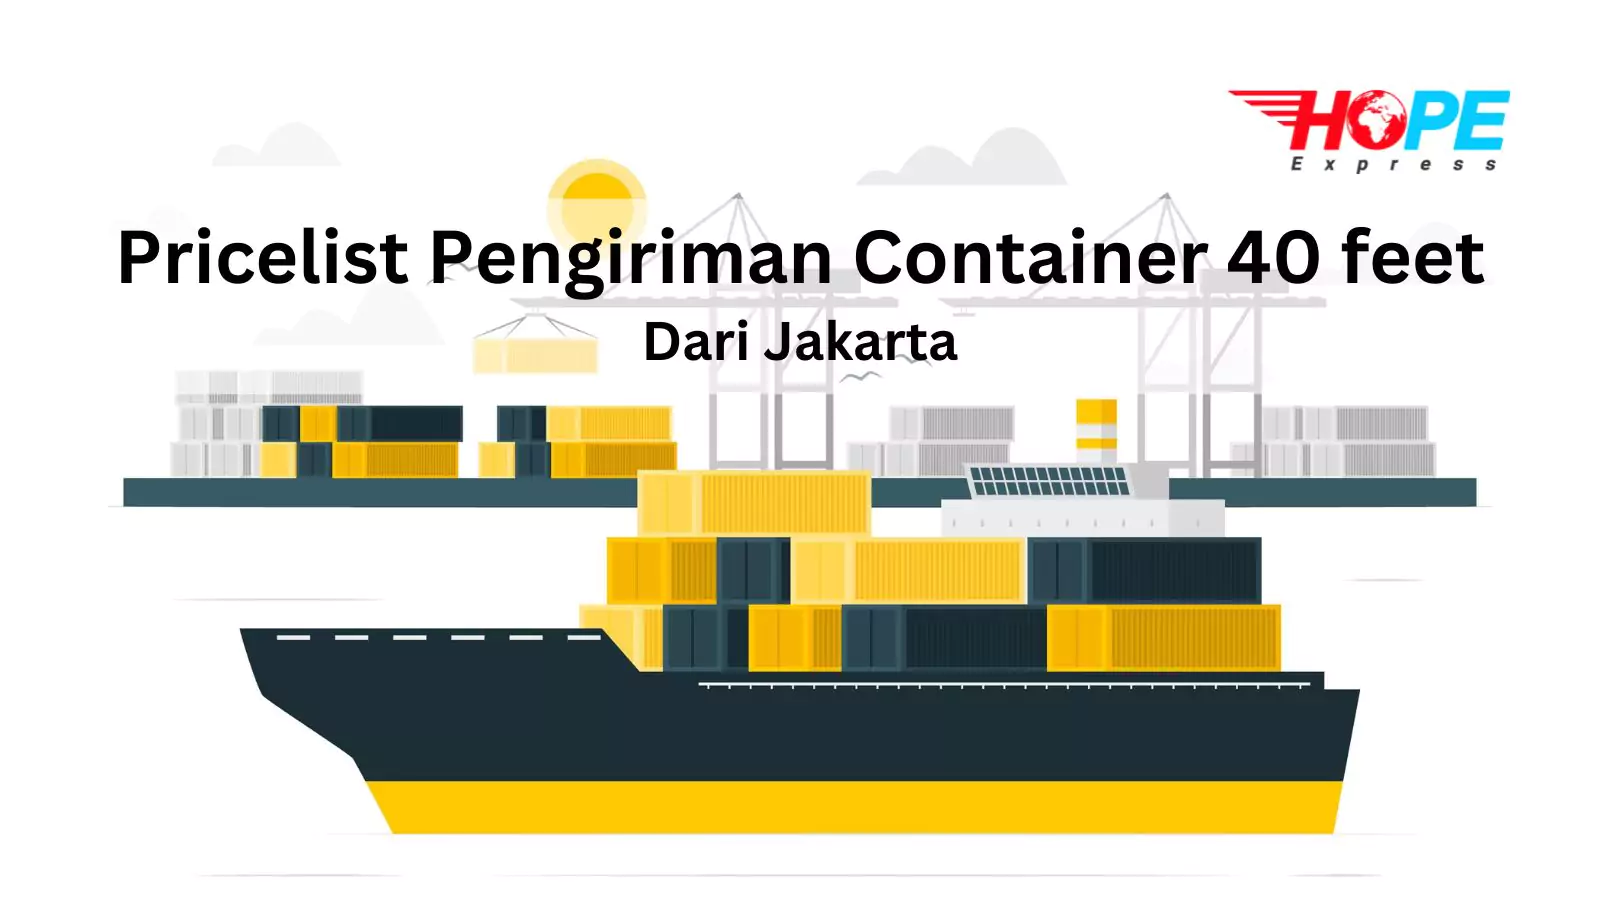 Daftar Harga Container Jakarta 40 feet